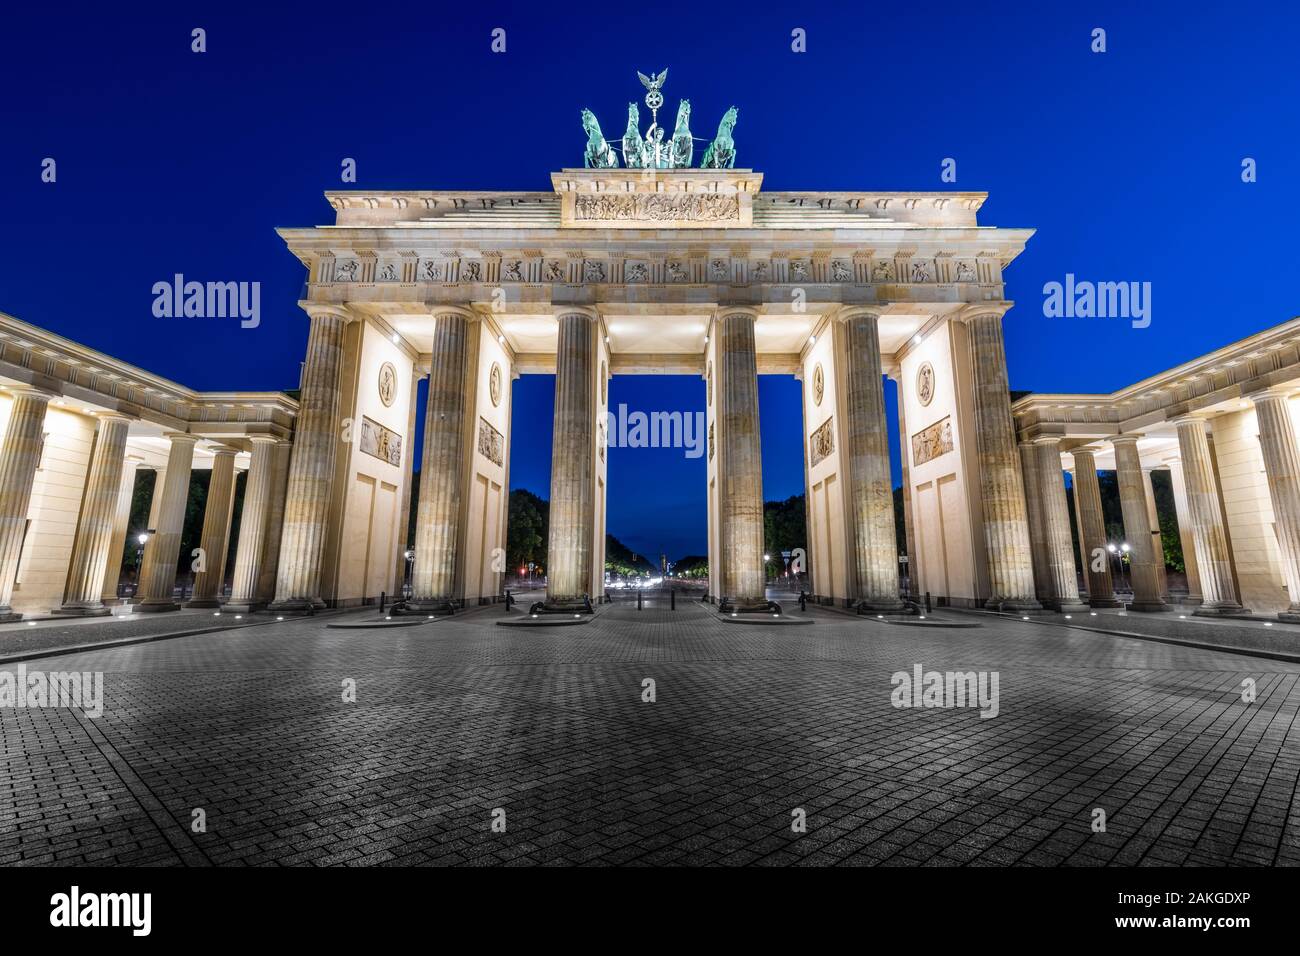 Symmetrical night view of the Brandenburg Gate, against a dark blue sky Stock Photo